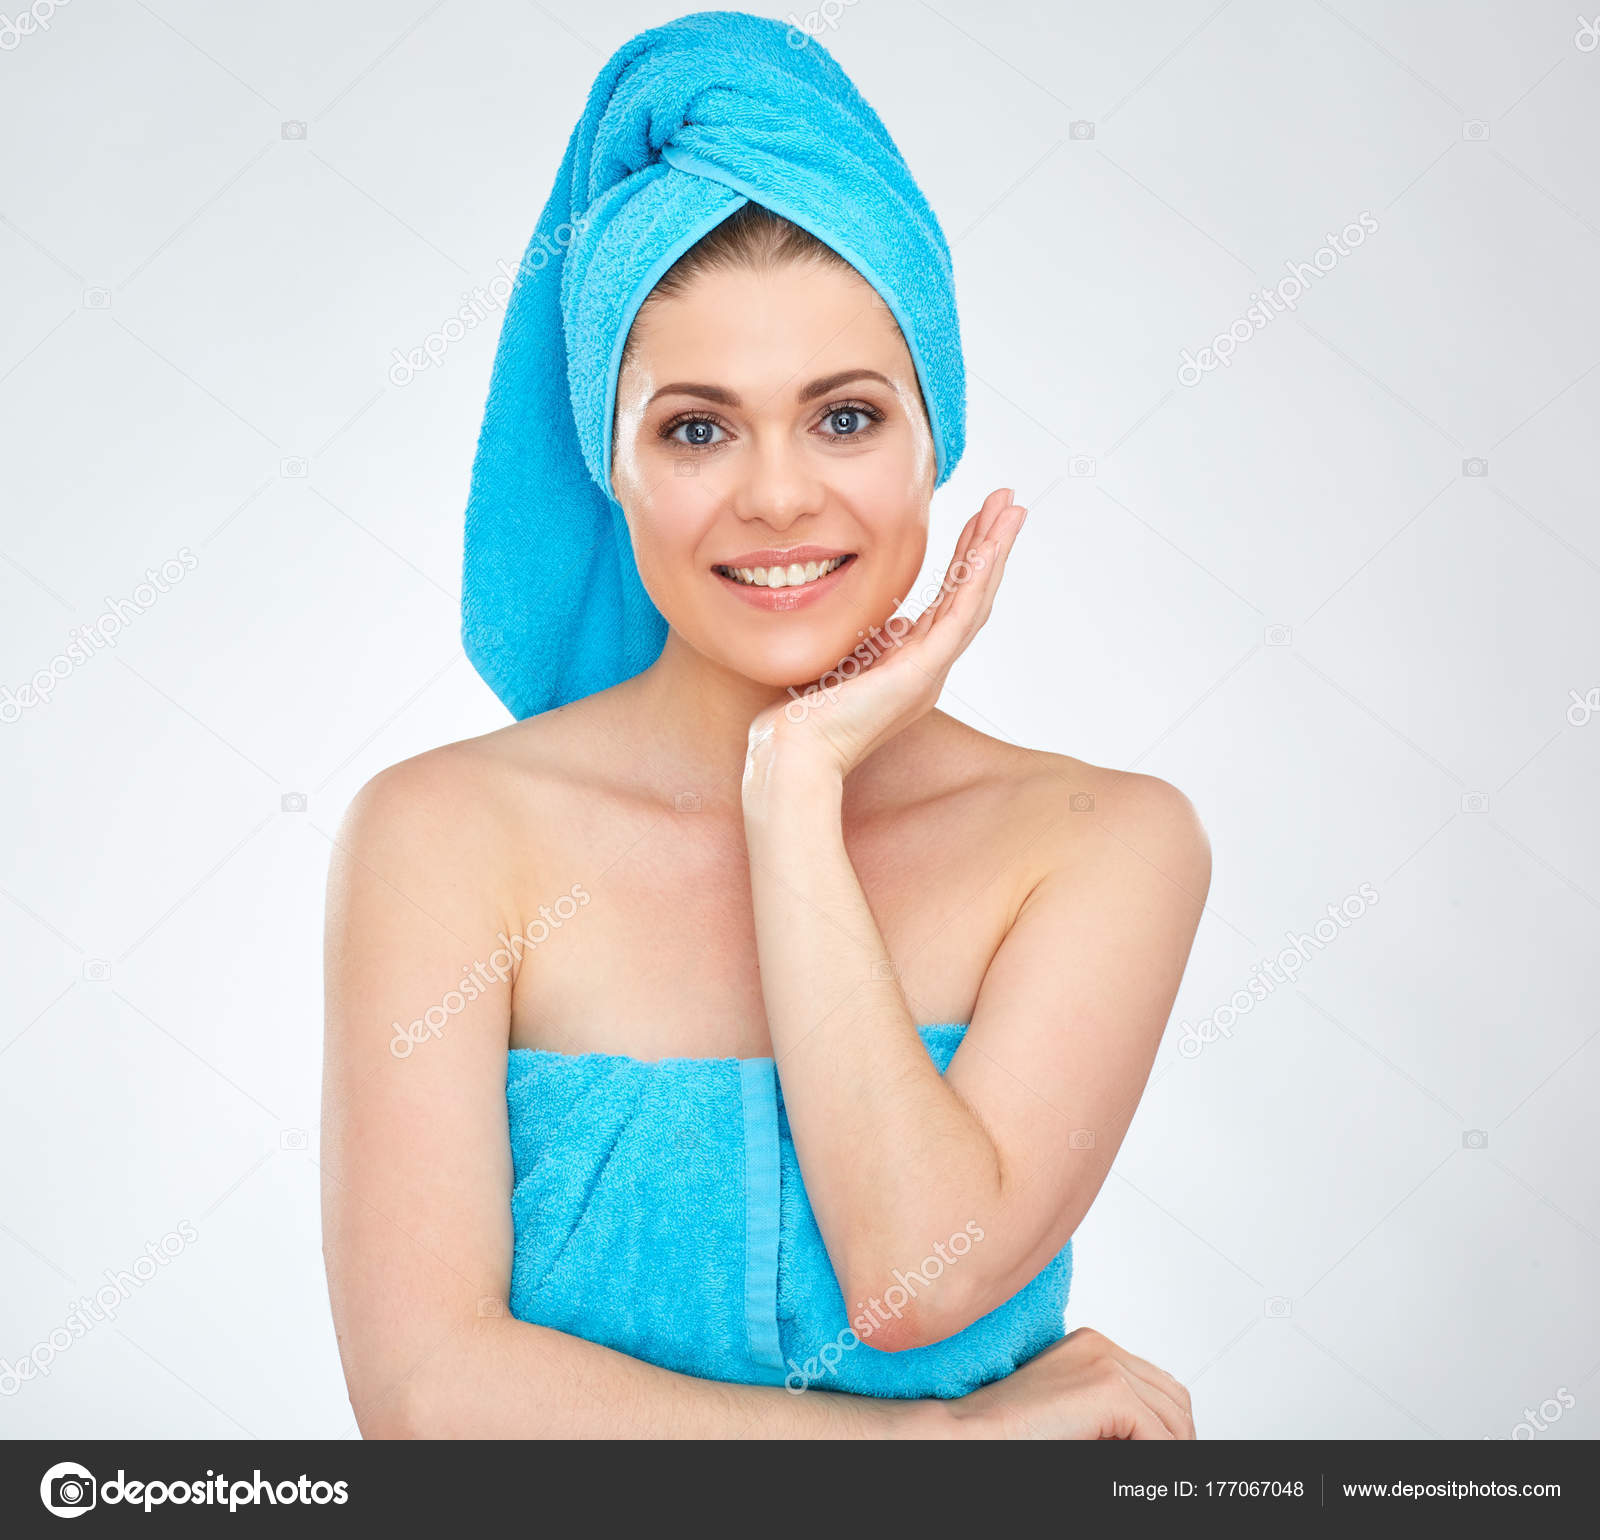 Полотенце на лоб. Женщина с полотенцем на голове. Полотенце на голове. Девушка в полотенце. Голубое полотенце на голове.